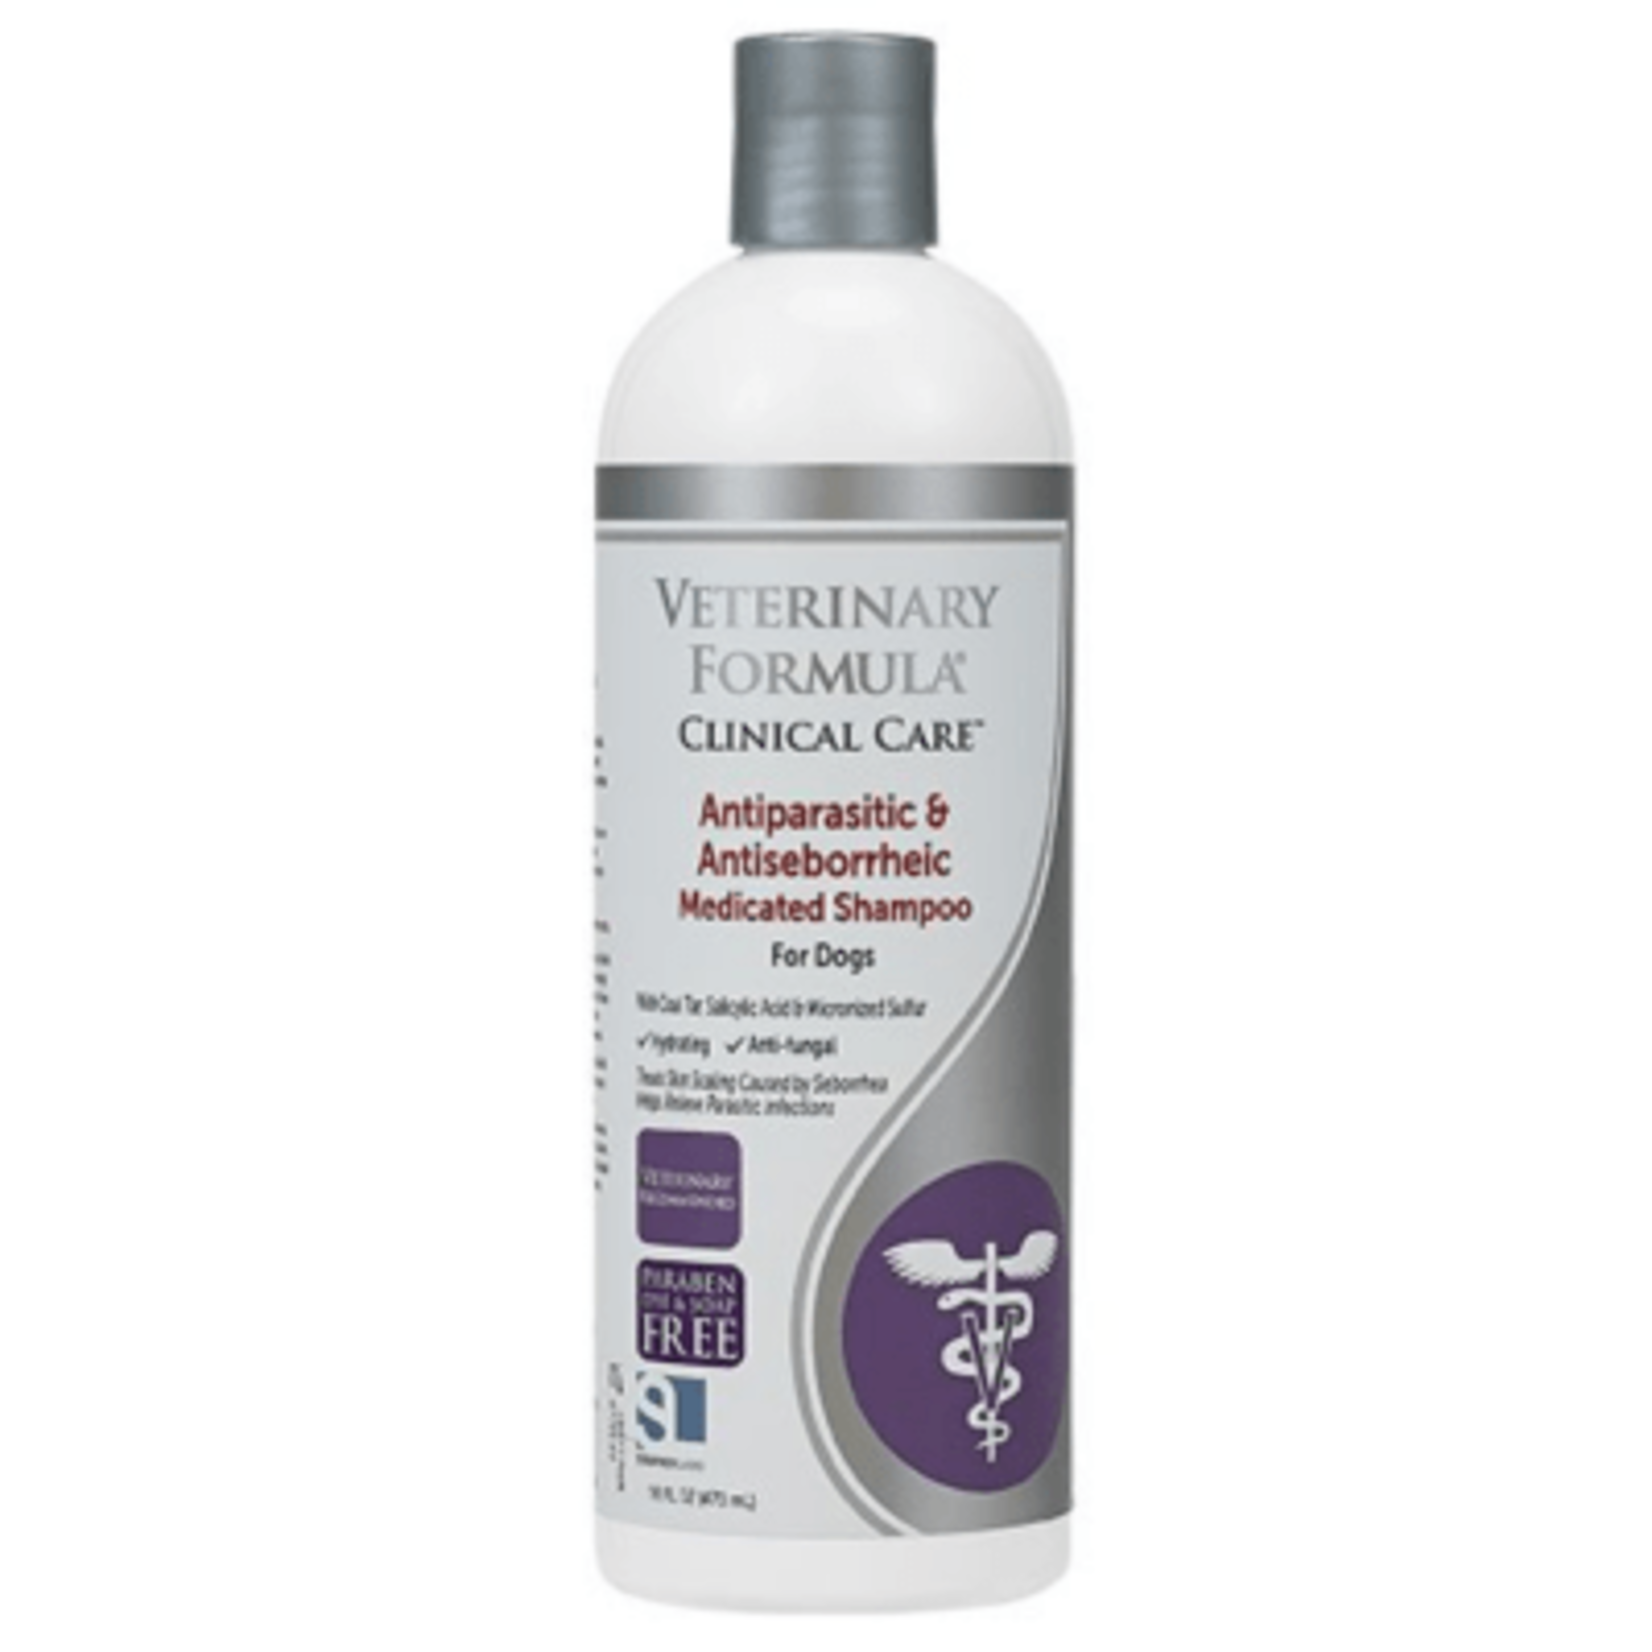 VETERINARY FORMULA Veterinary Formula Antiparasitic And Antiseborrheic Medicated Shampoo Dog 16oz